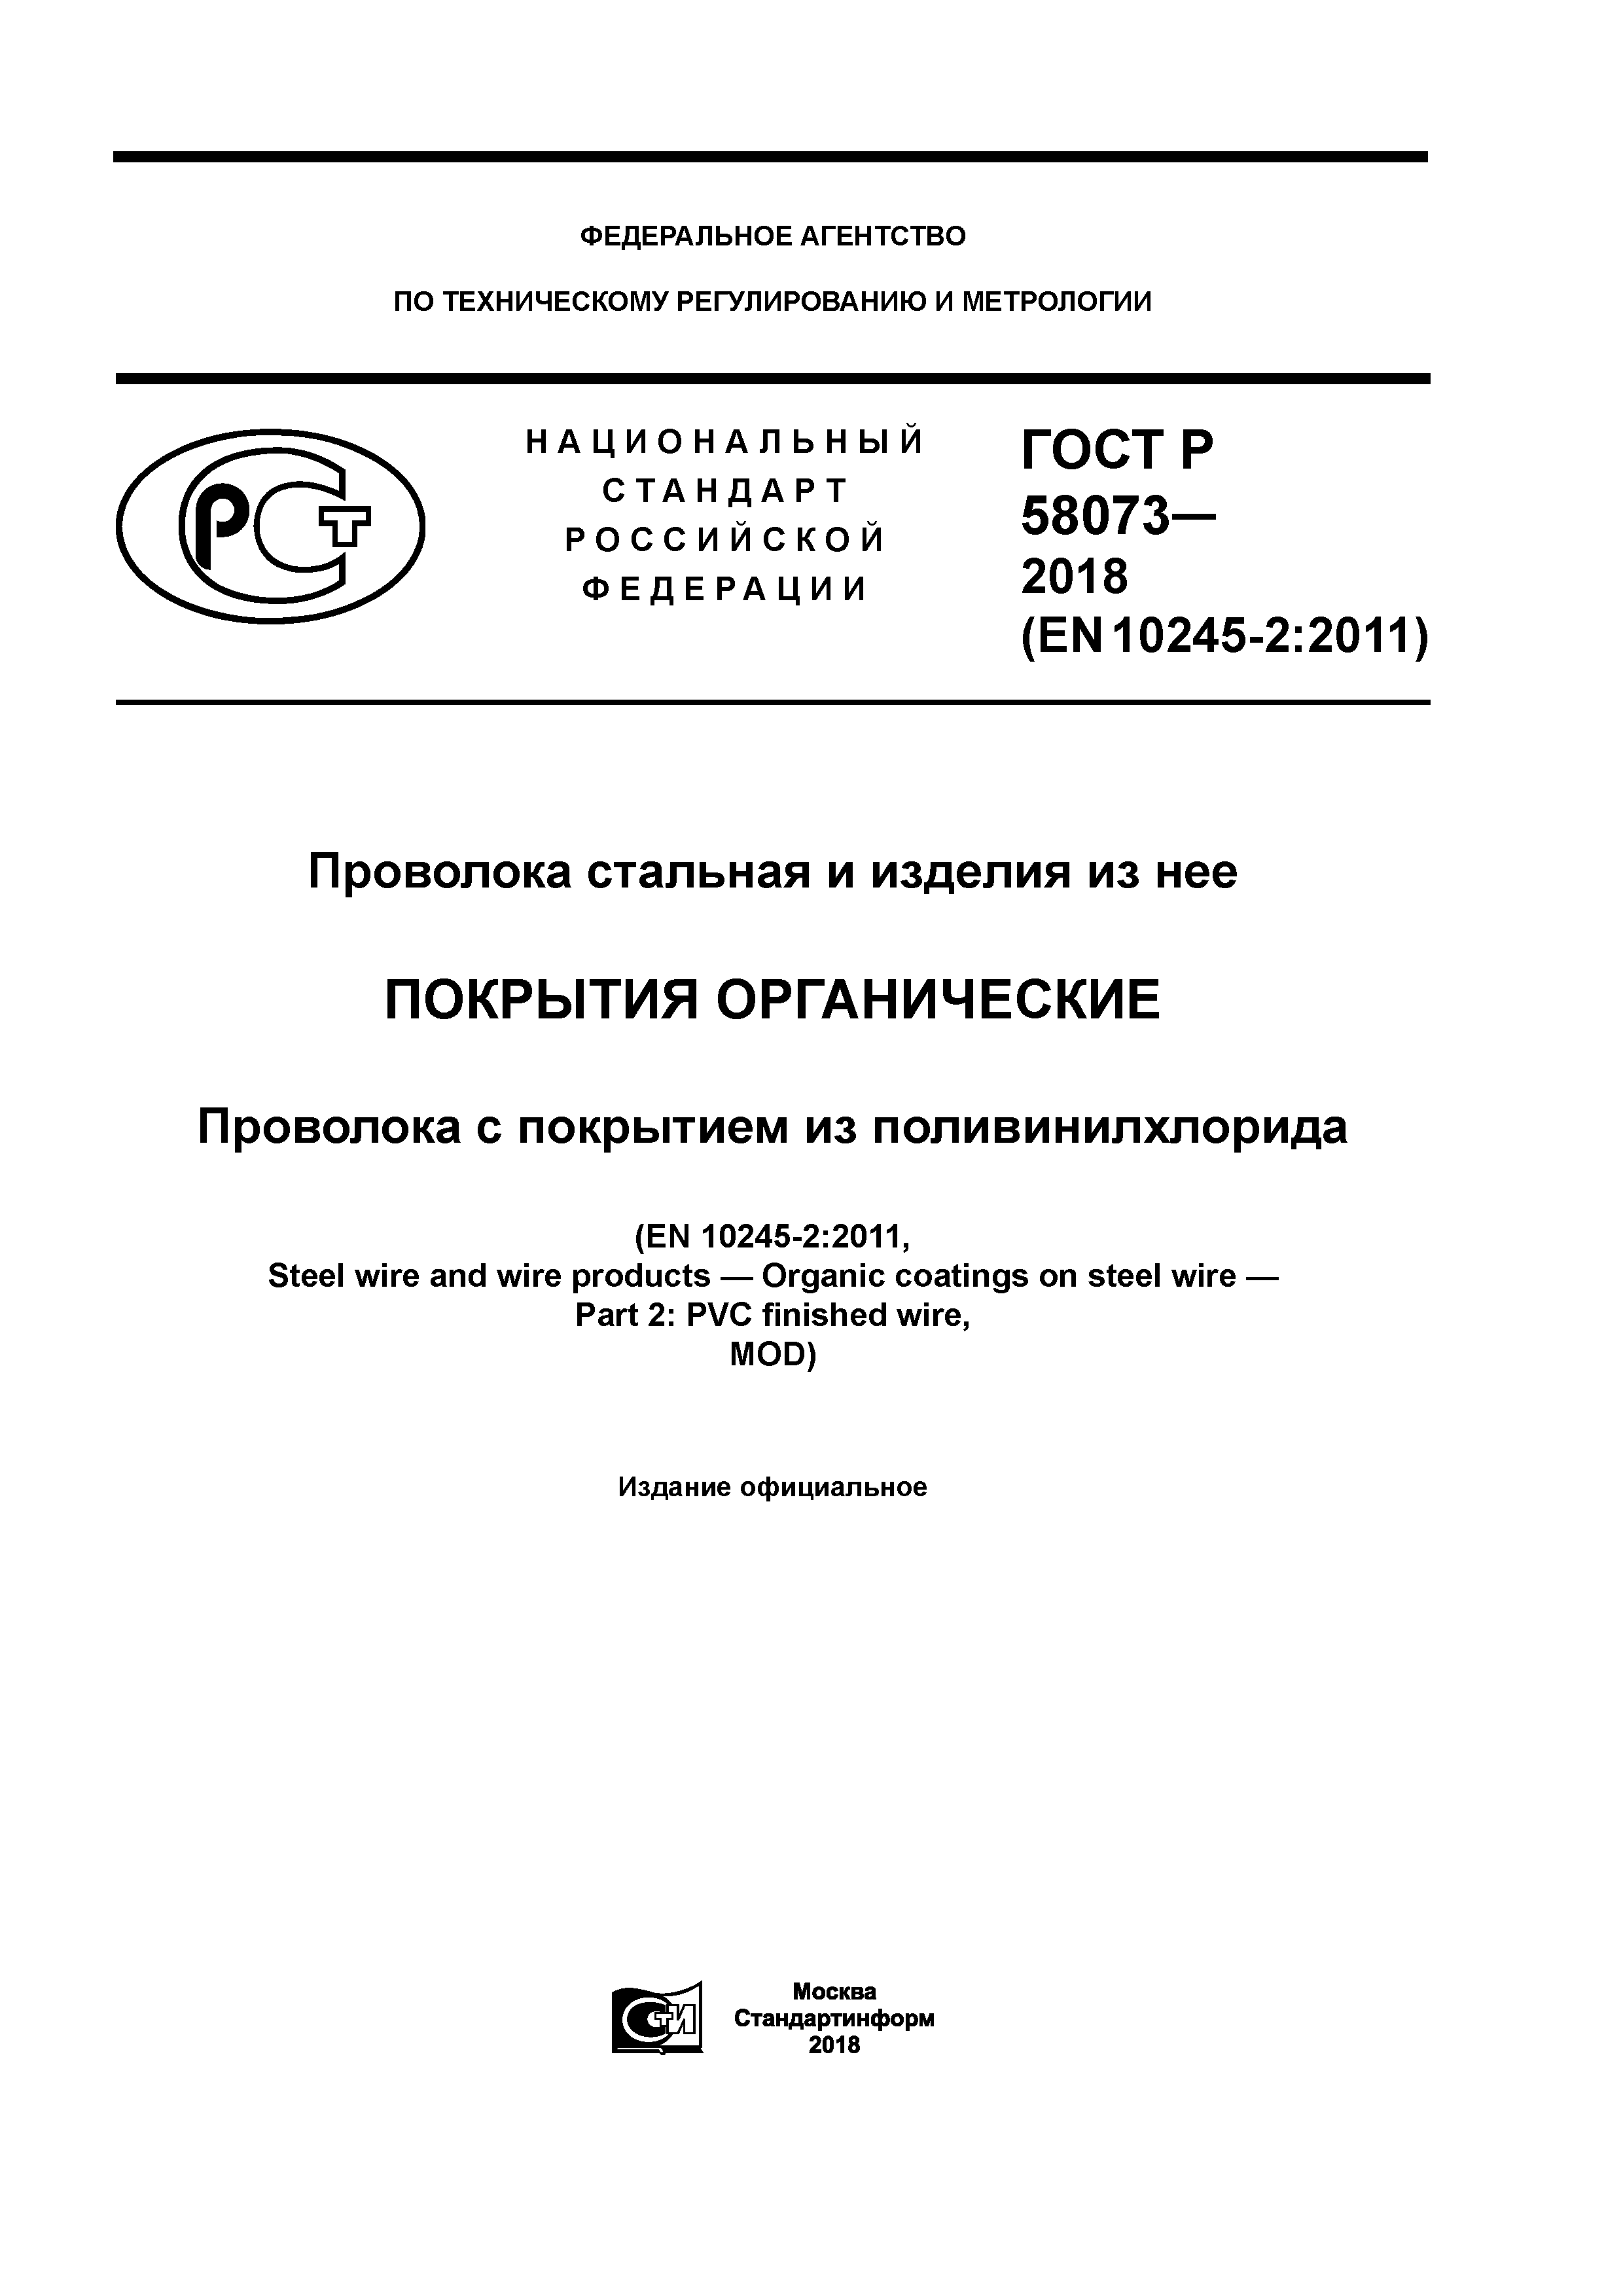 ГОСТ Р 58073-2018